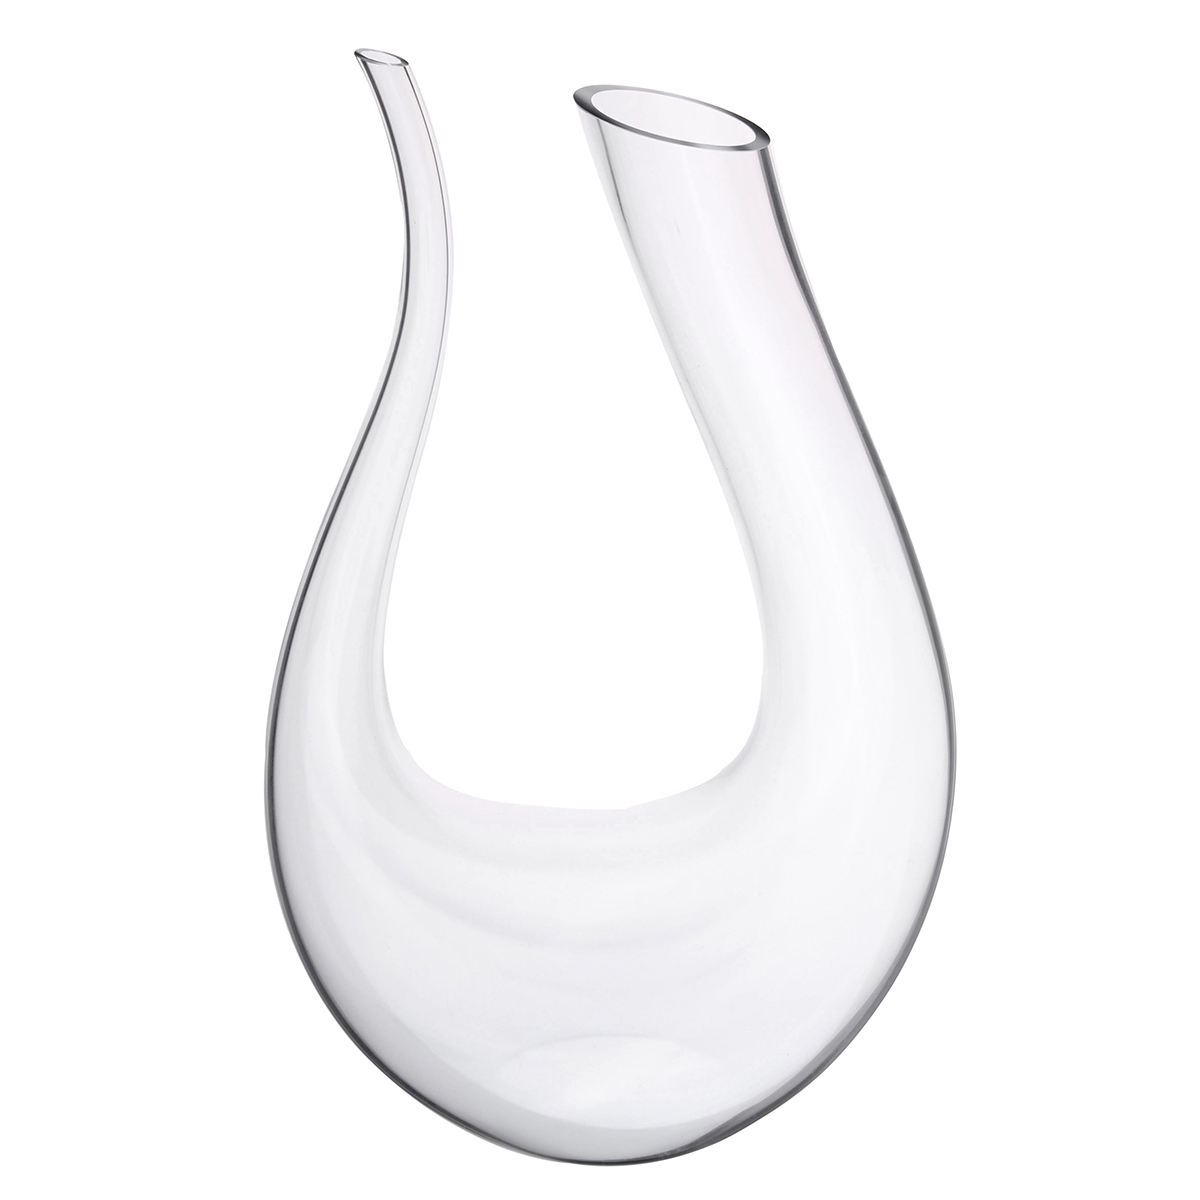 15L-Wine-Champange-Glass-Decanter-U-shaped-Bottle-Jug-Pourer-Aerator-Lead-Free-Crystal-Glass-1136894-1